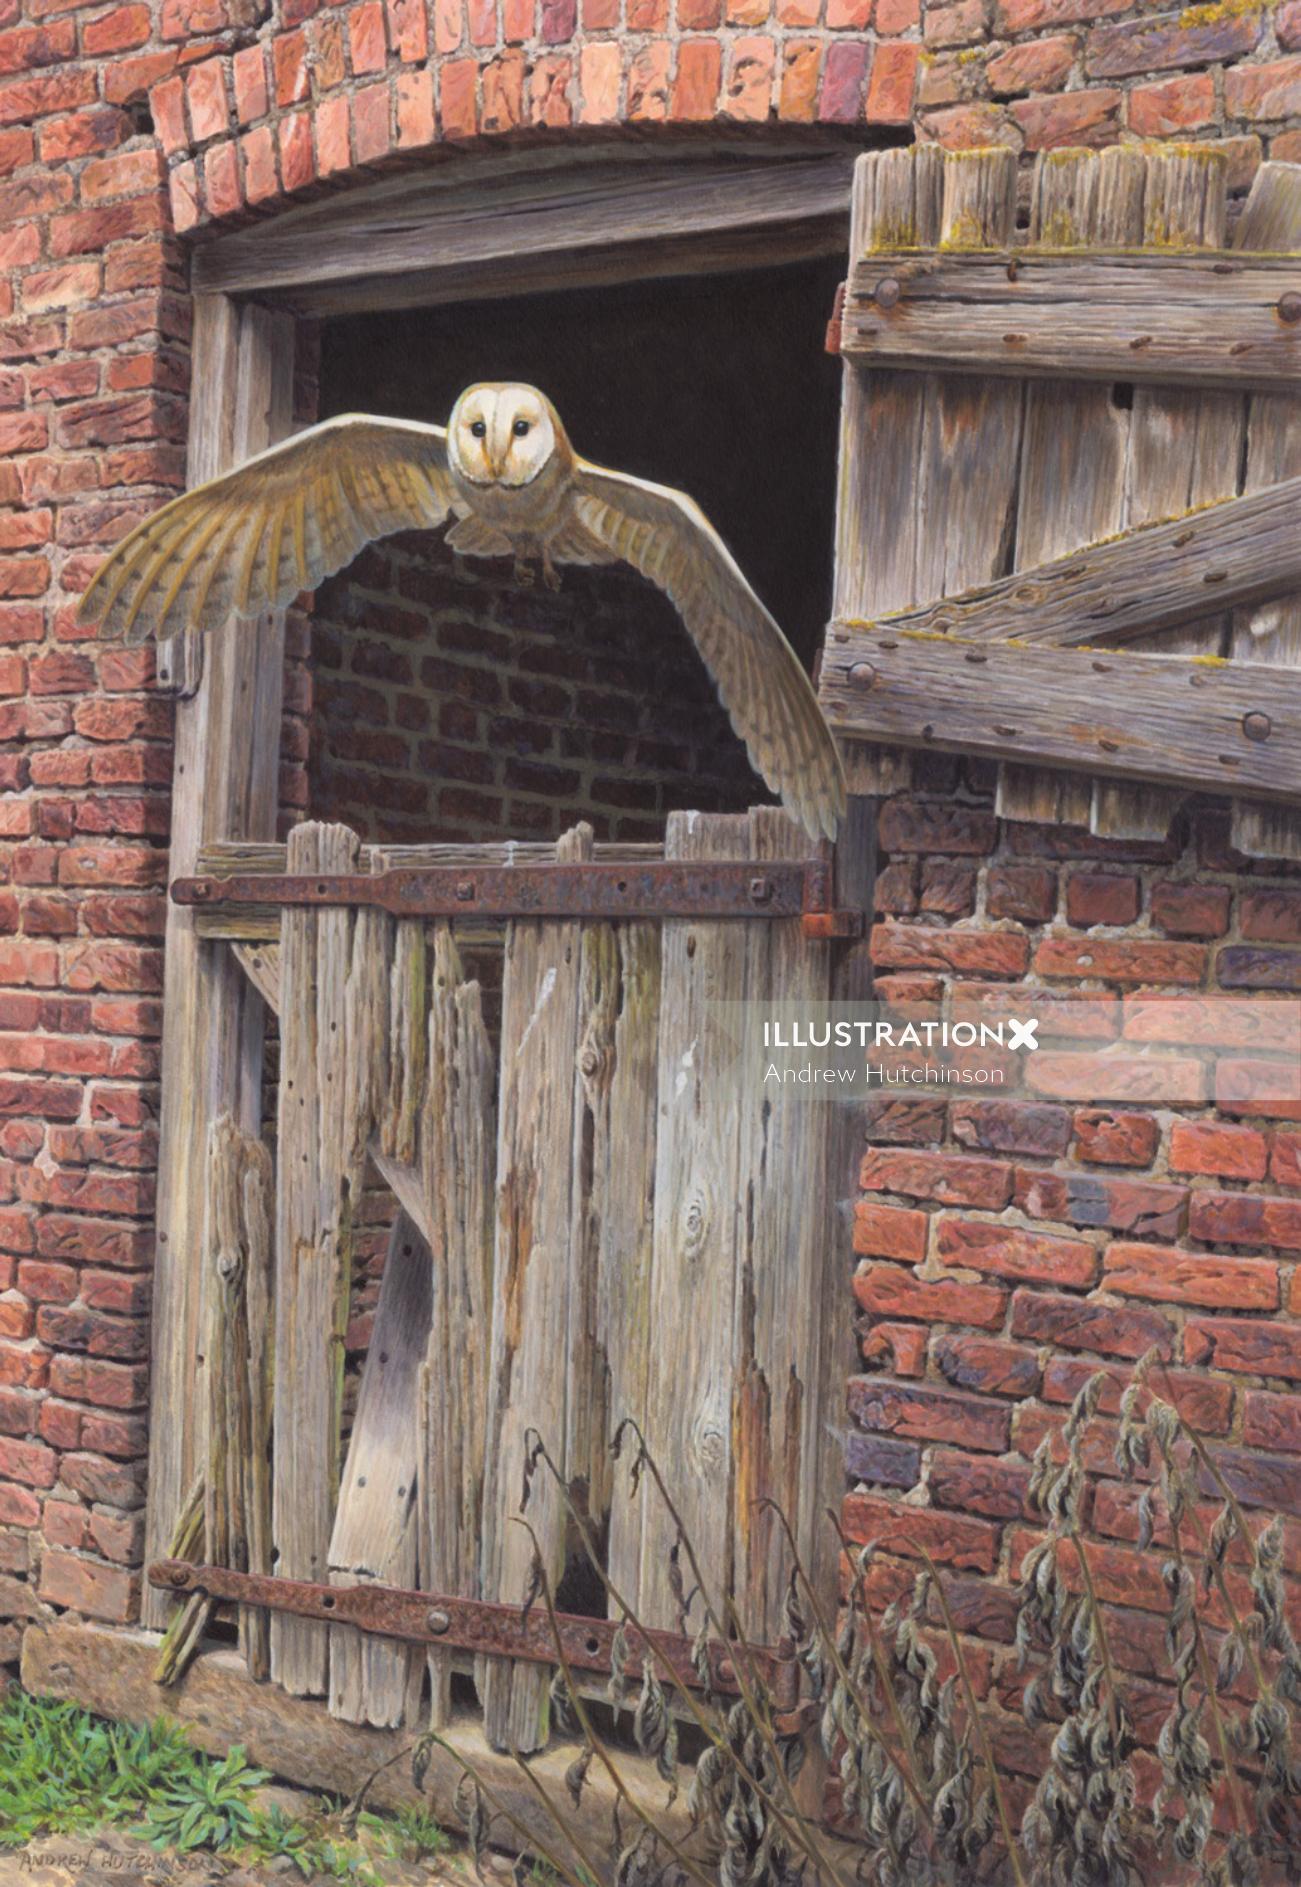 Barn owl illustration by Andrew Hutchinson